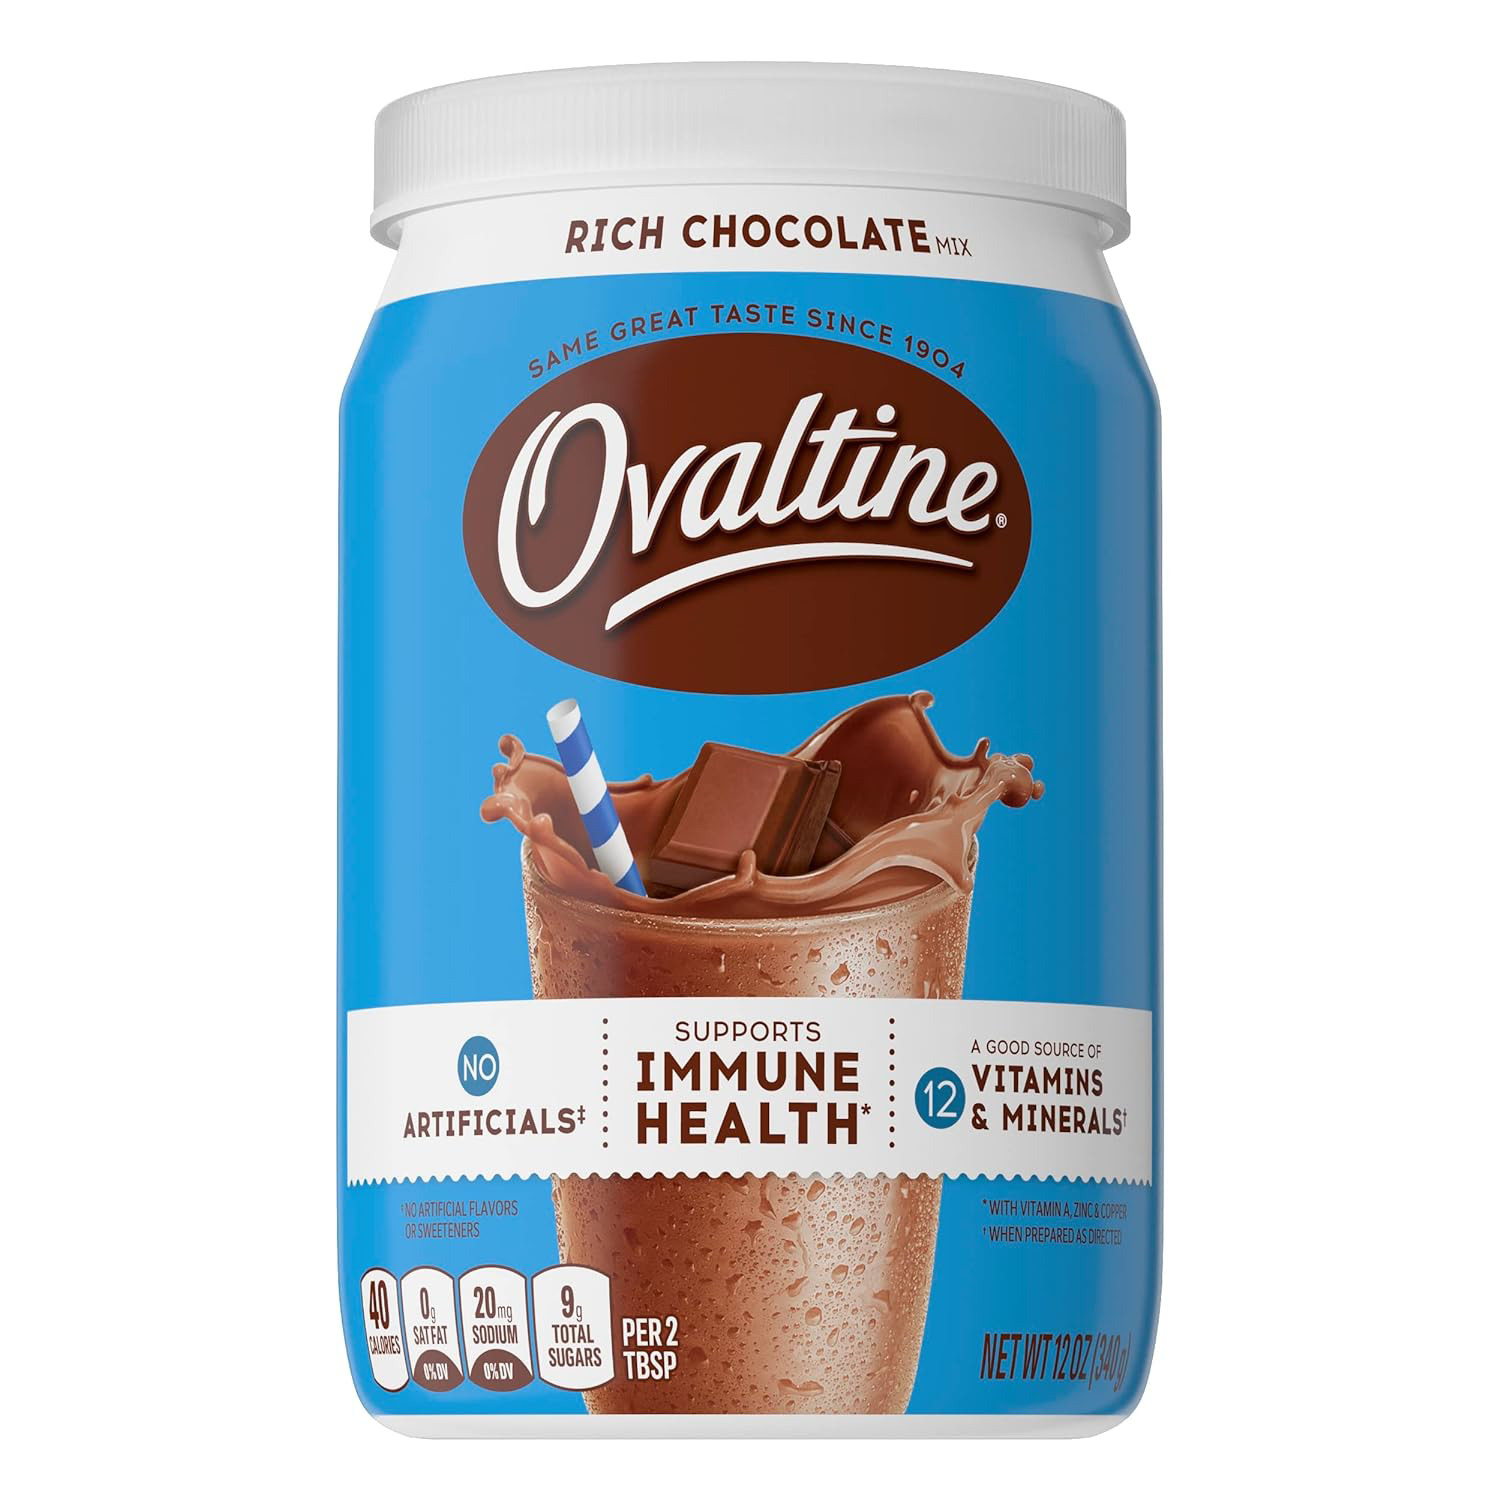 Ovaltine Rich Chocolate - 12 oz Pack of 6